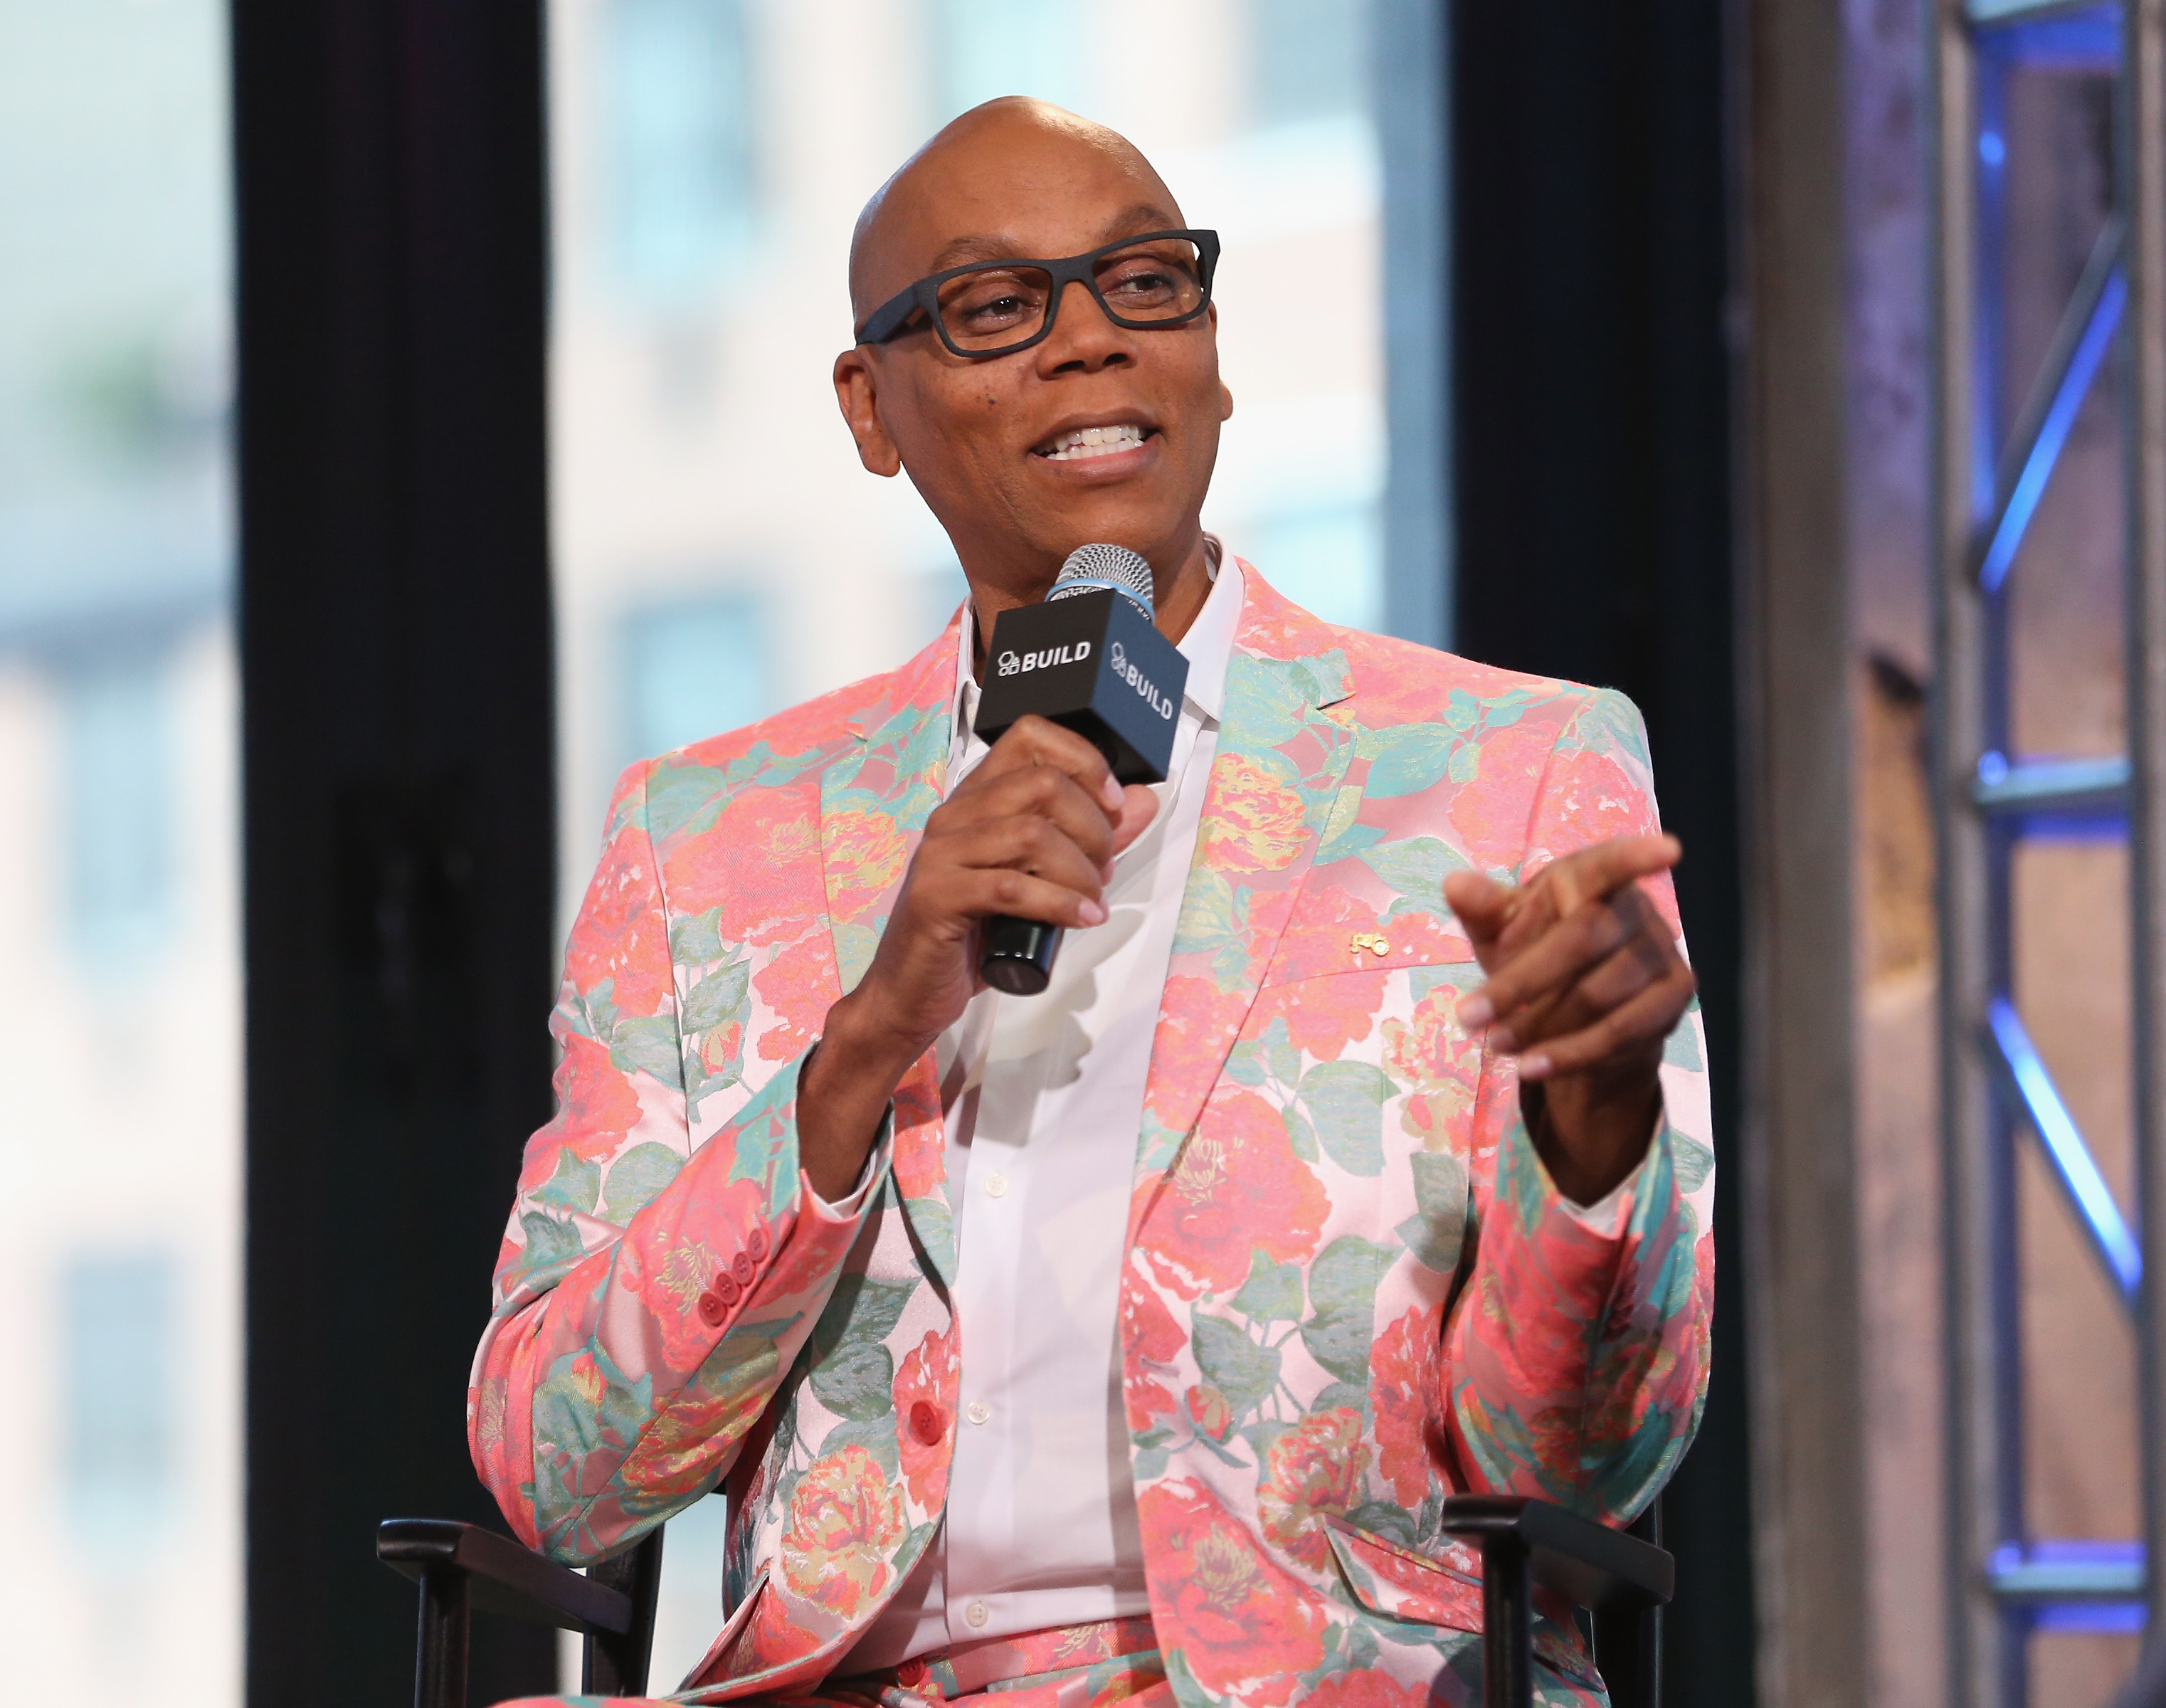 RuPaul Charles of 'RuPaul's Drag Race' attends AOL Build Speakers Series Pink Suit